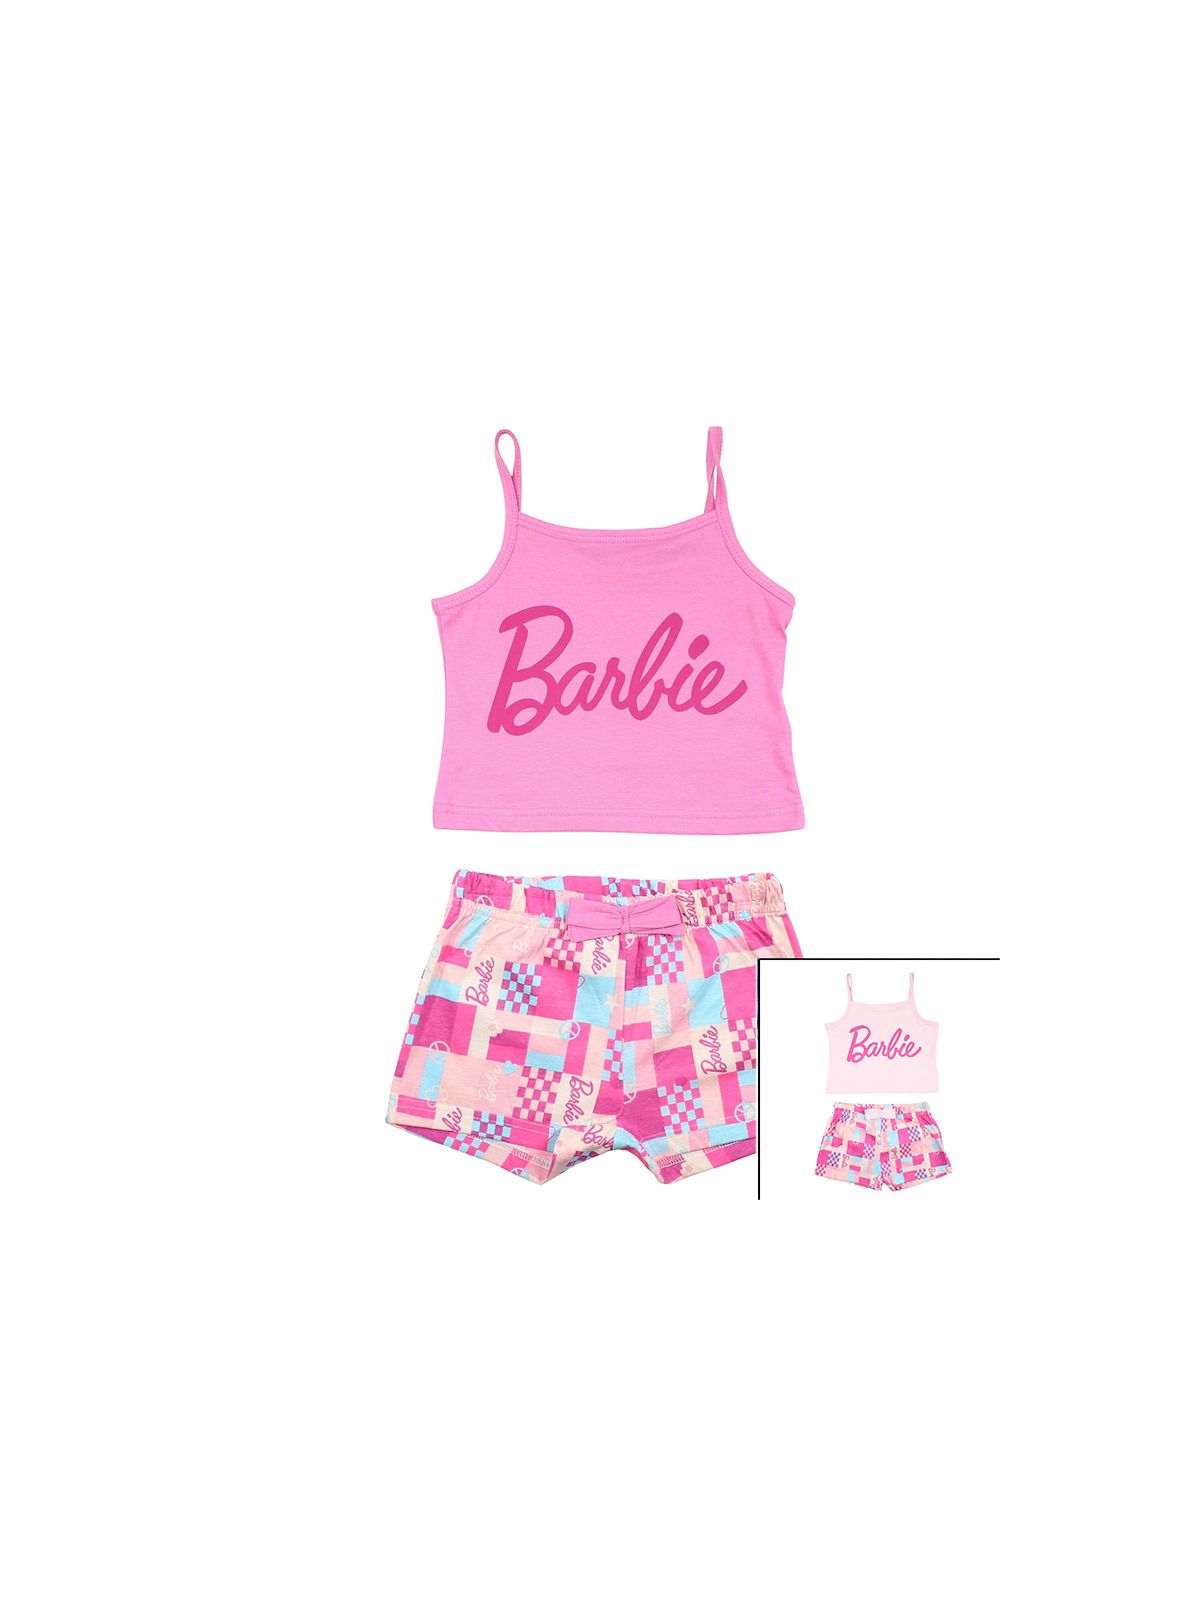 Barbie set.